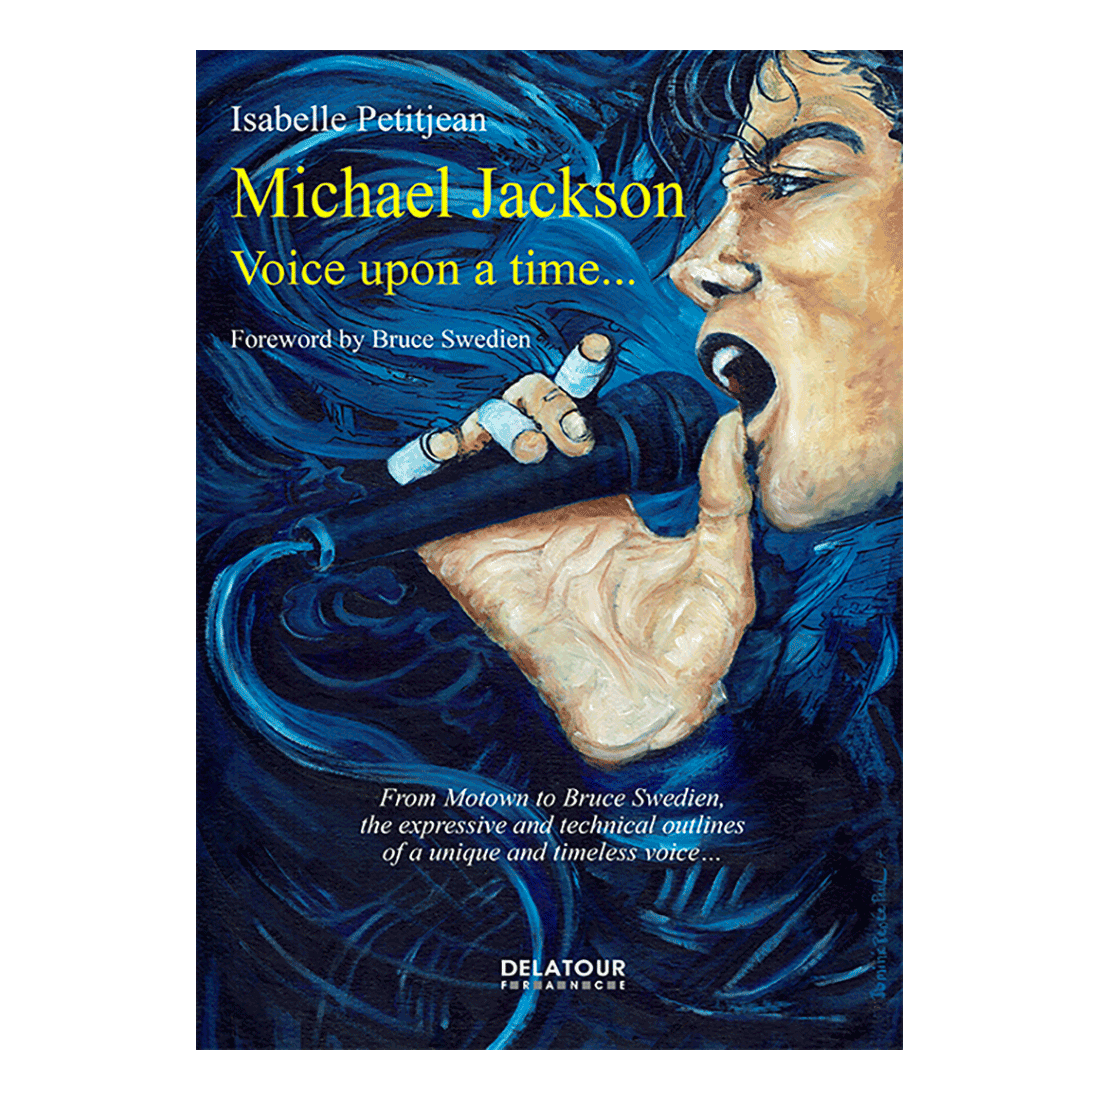 Michael Jackson: Voice upon a time...